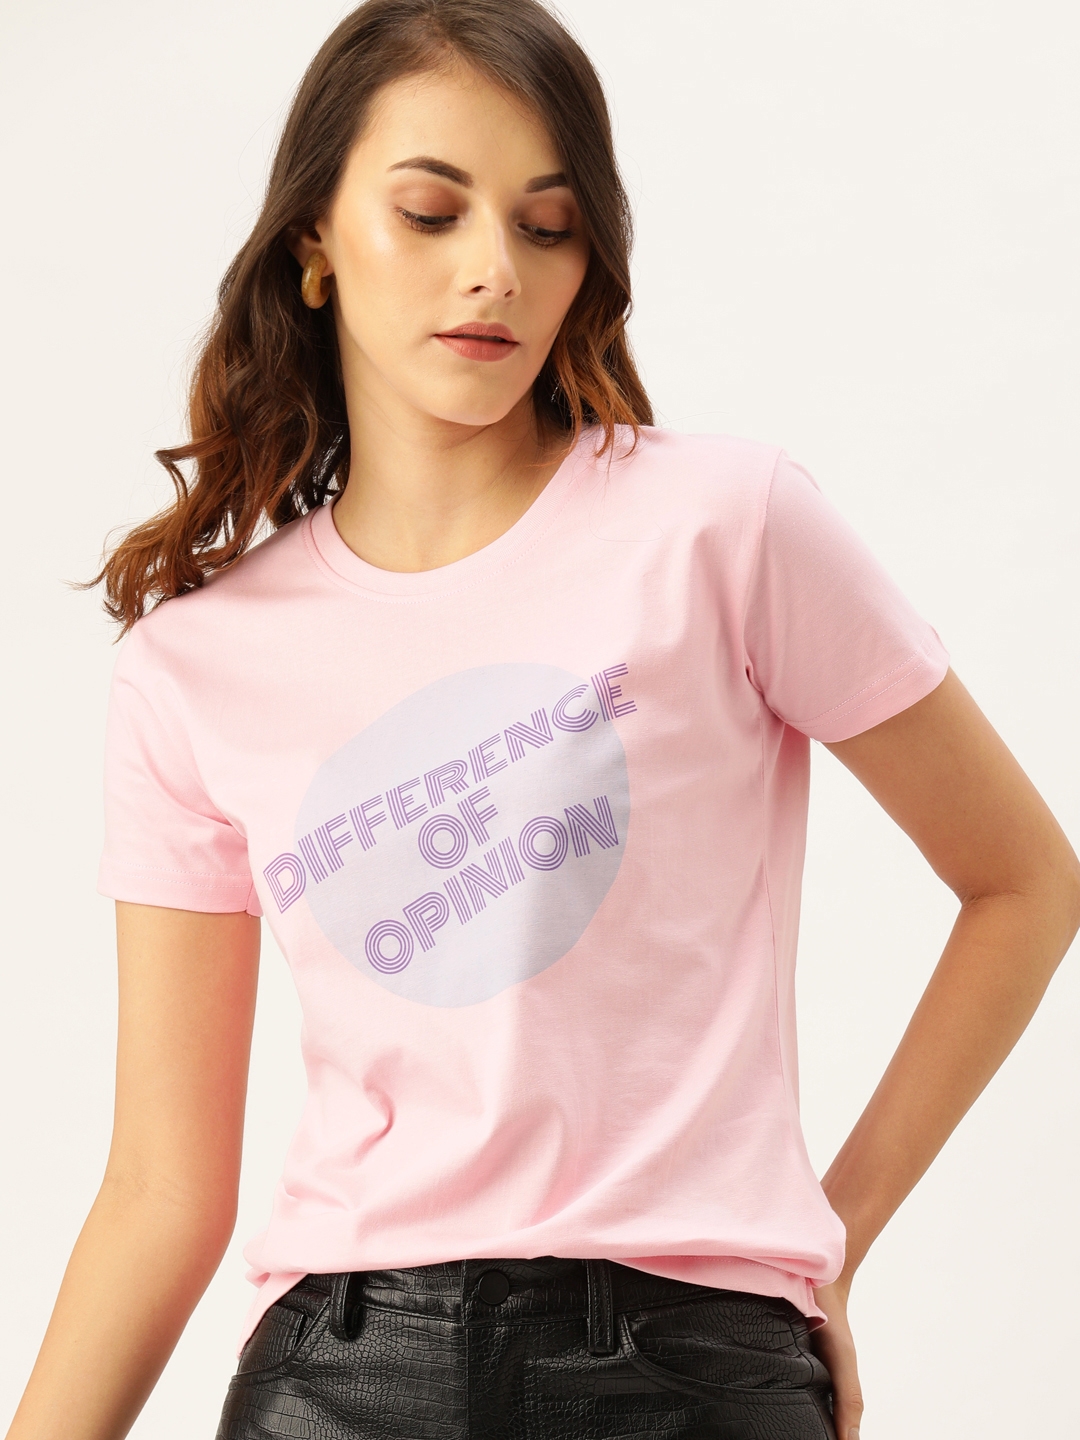 Difference of Opinion | Difference of Opinion Women Pink Typography Printed T-Shirt